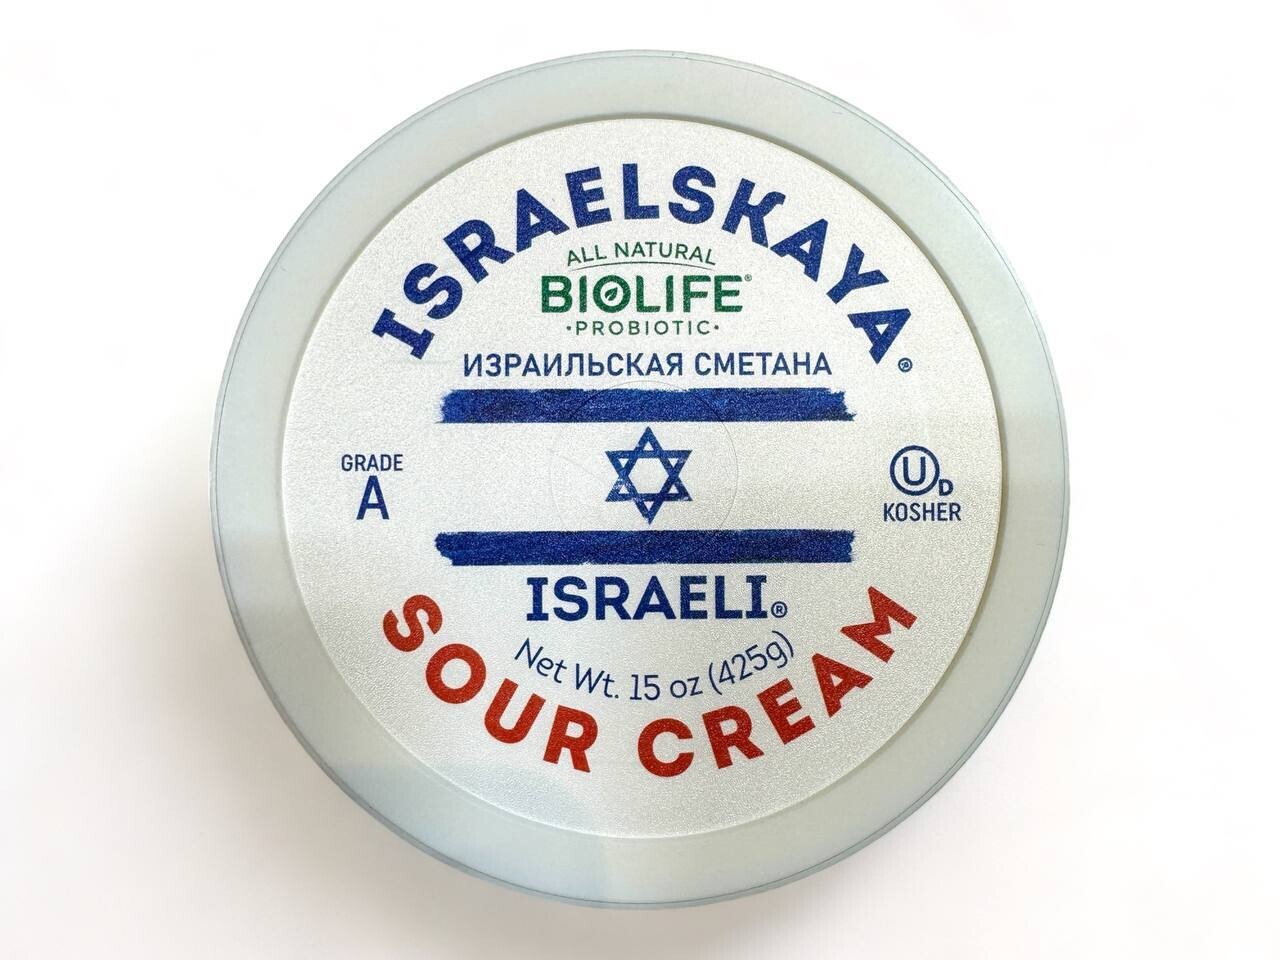 Sour Cream Israelskaya 15oz